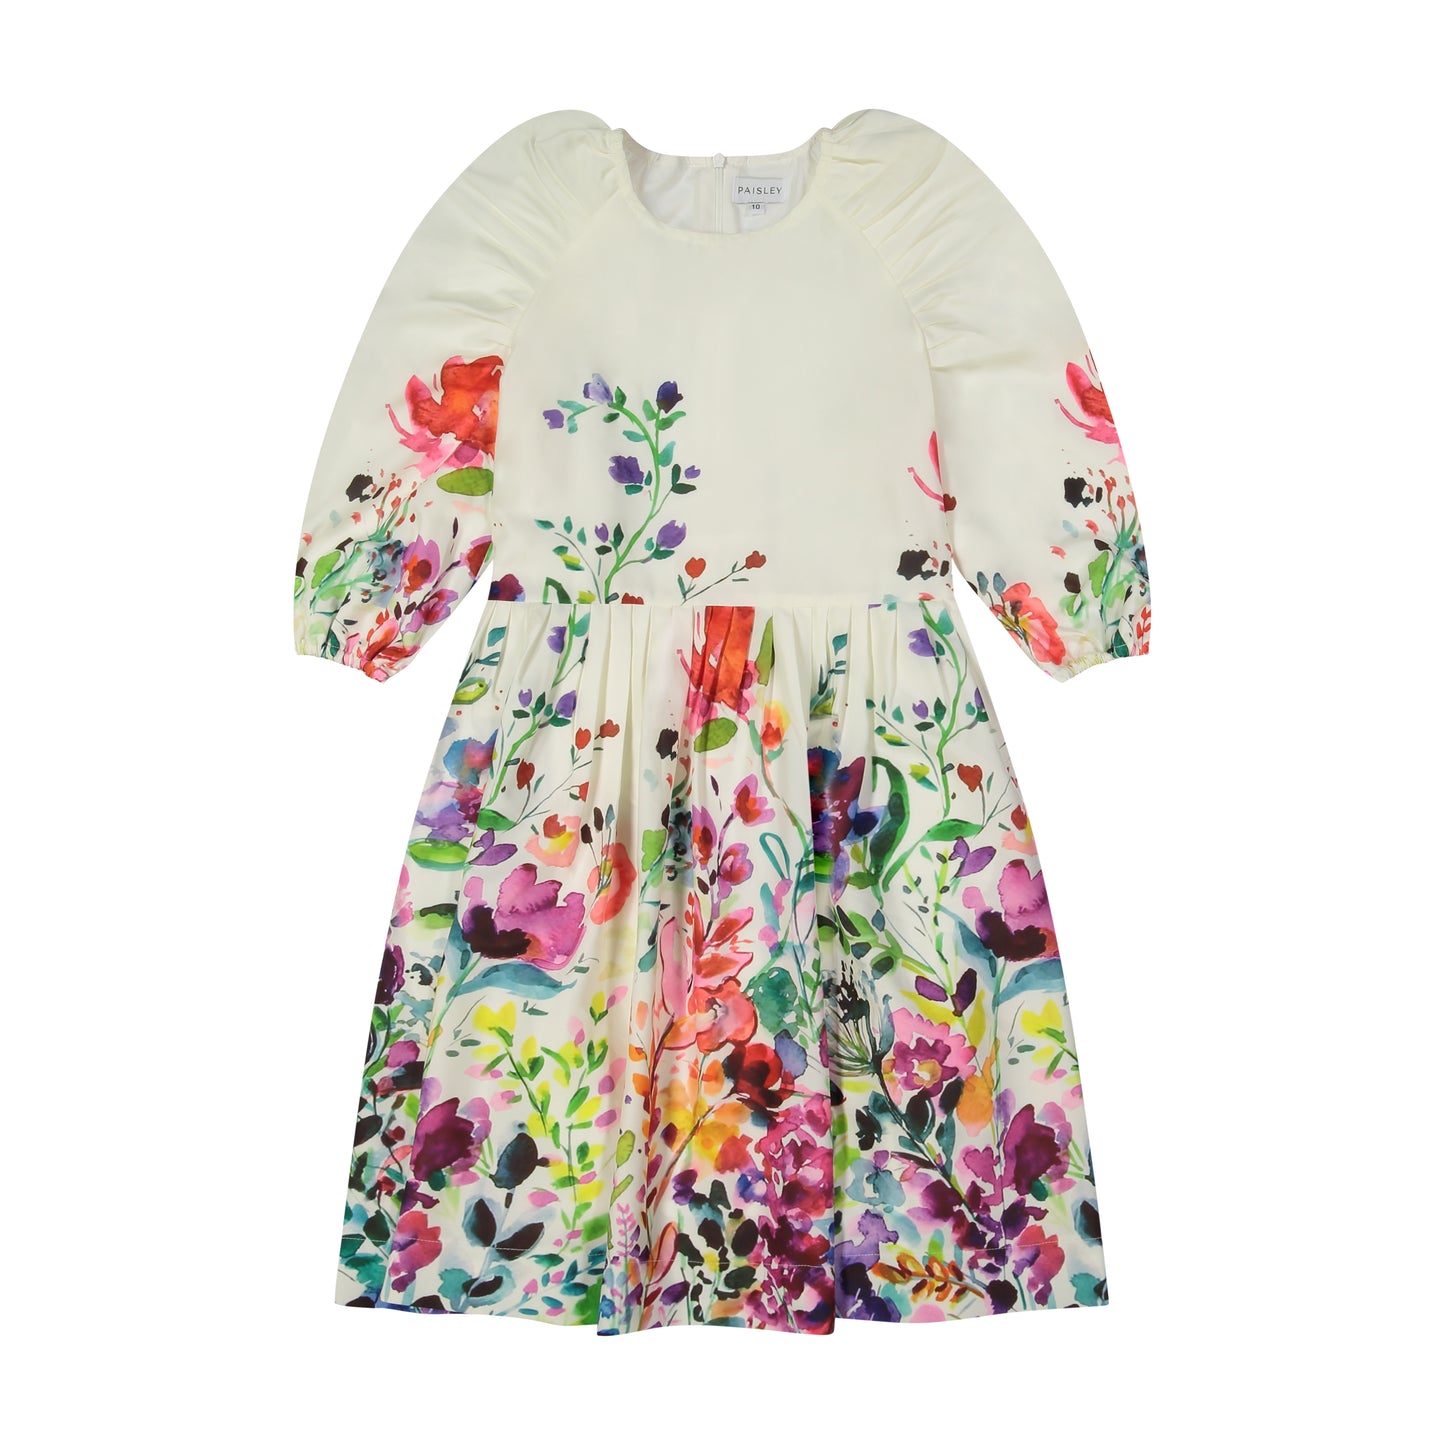 Paisley Floral Bottom Dress